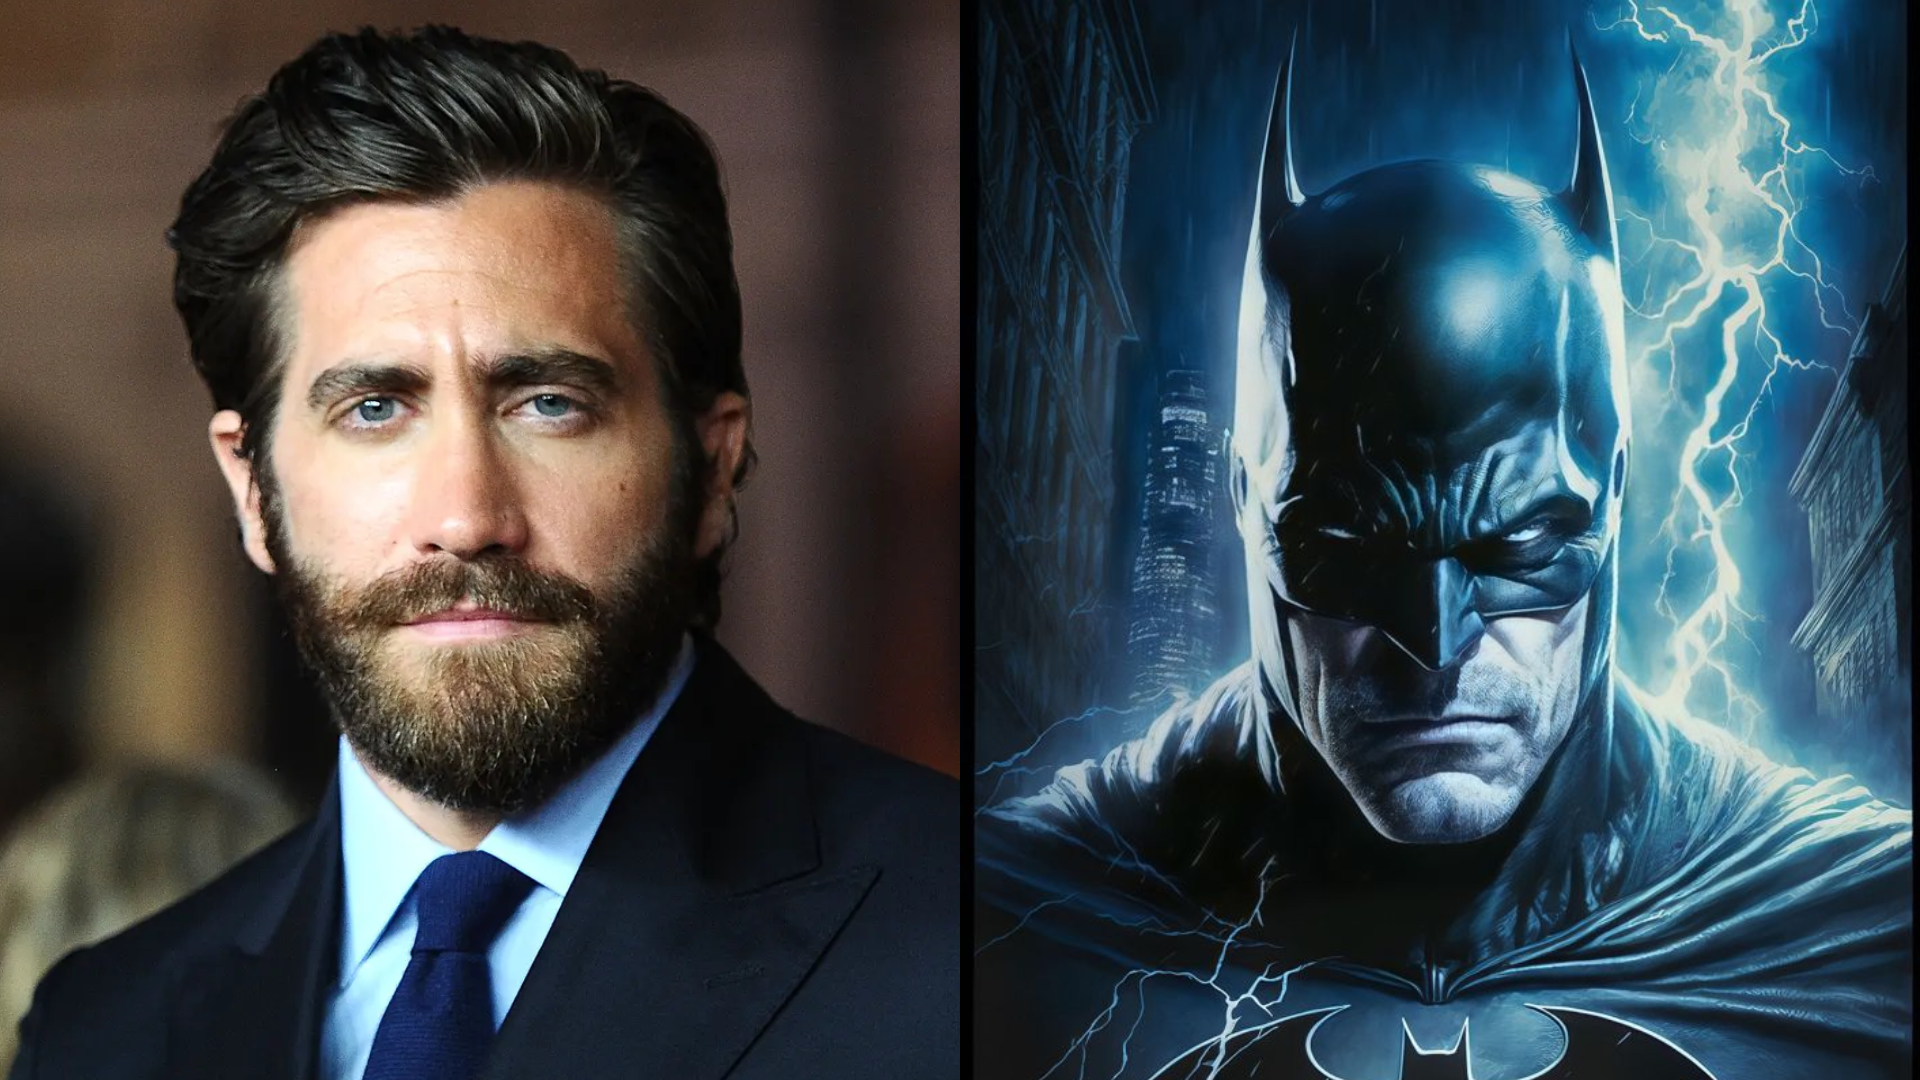 Jake Gyllenhaal Says He Is “Intimidated” To Play Batman Two Decades After Losing ‘Batman Begins’